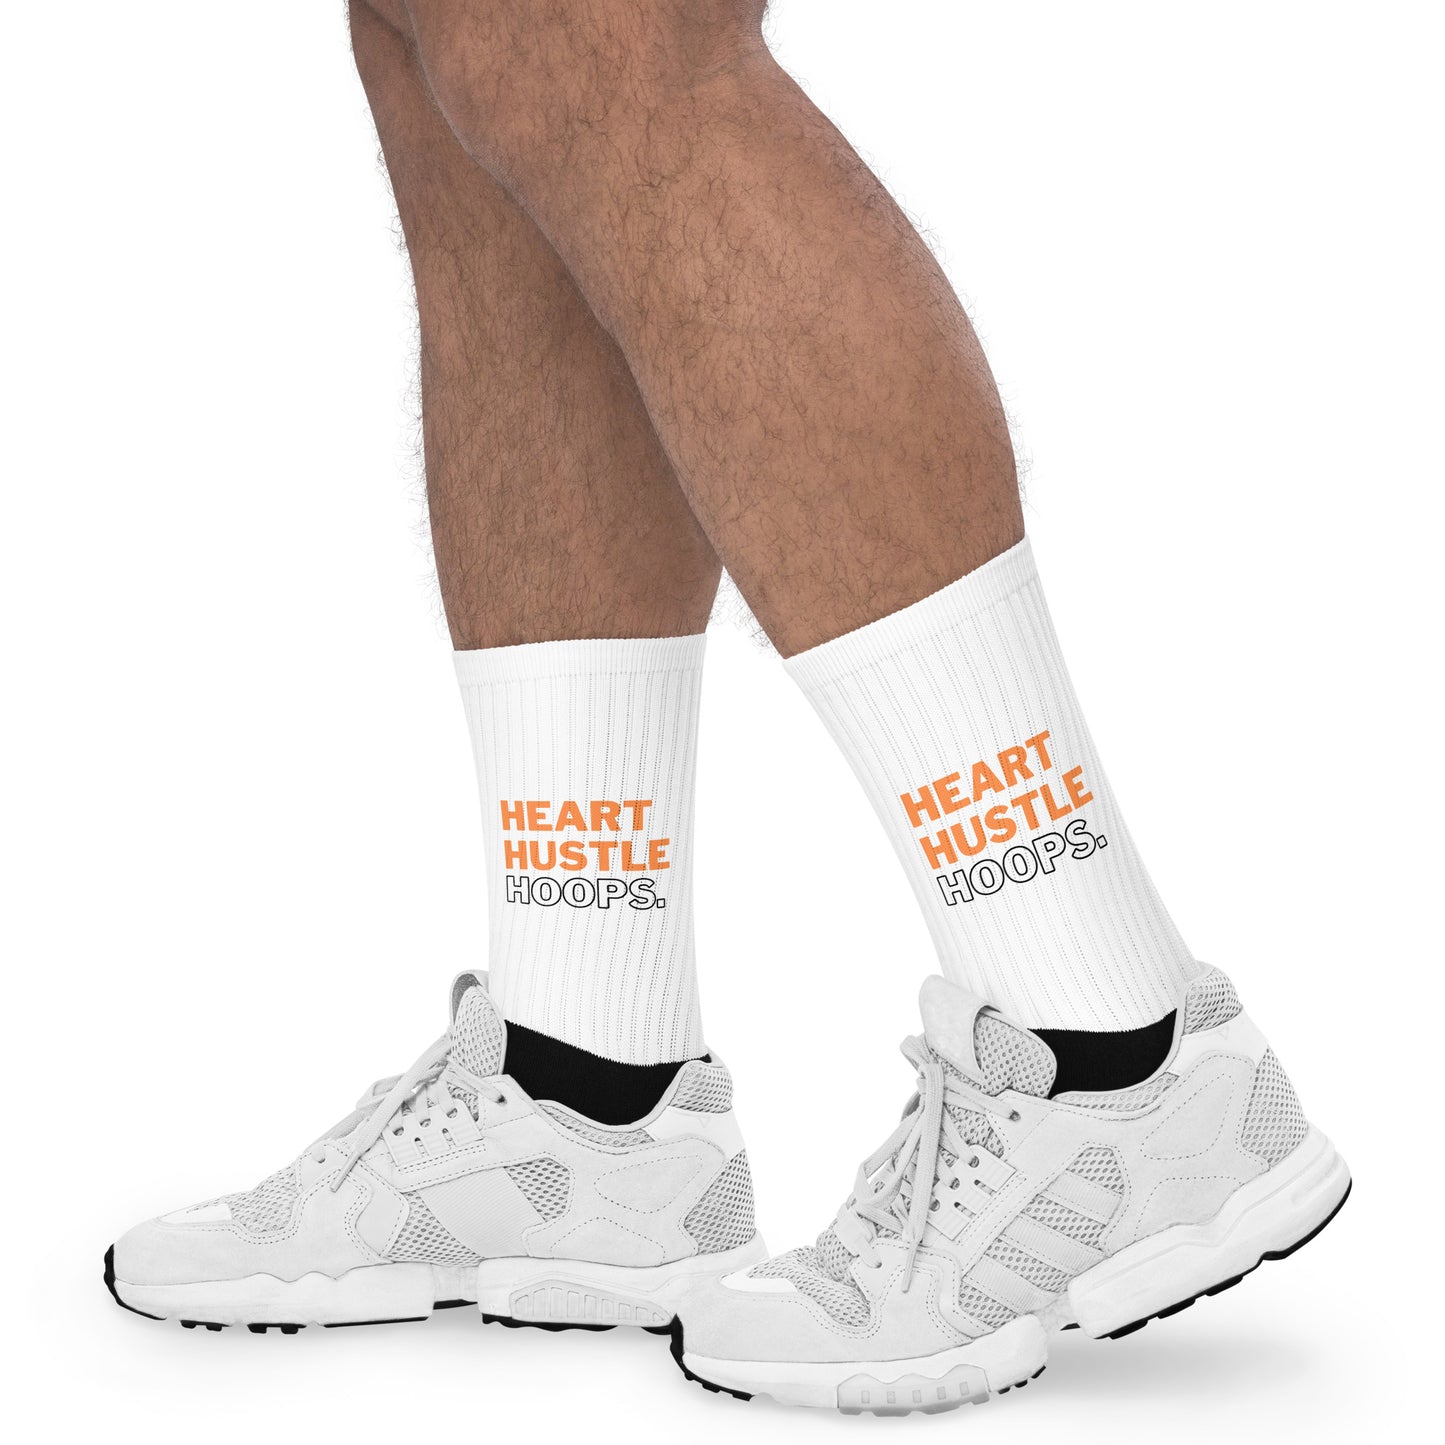 Heart Hustle Hoops (Orange) - Socks